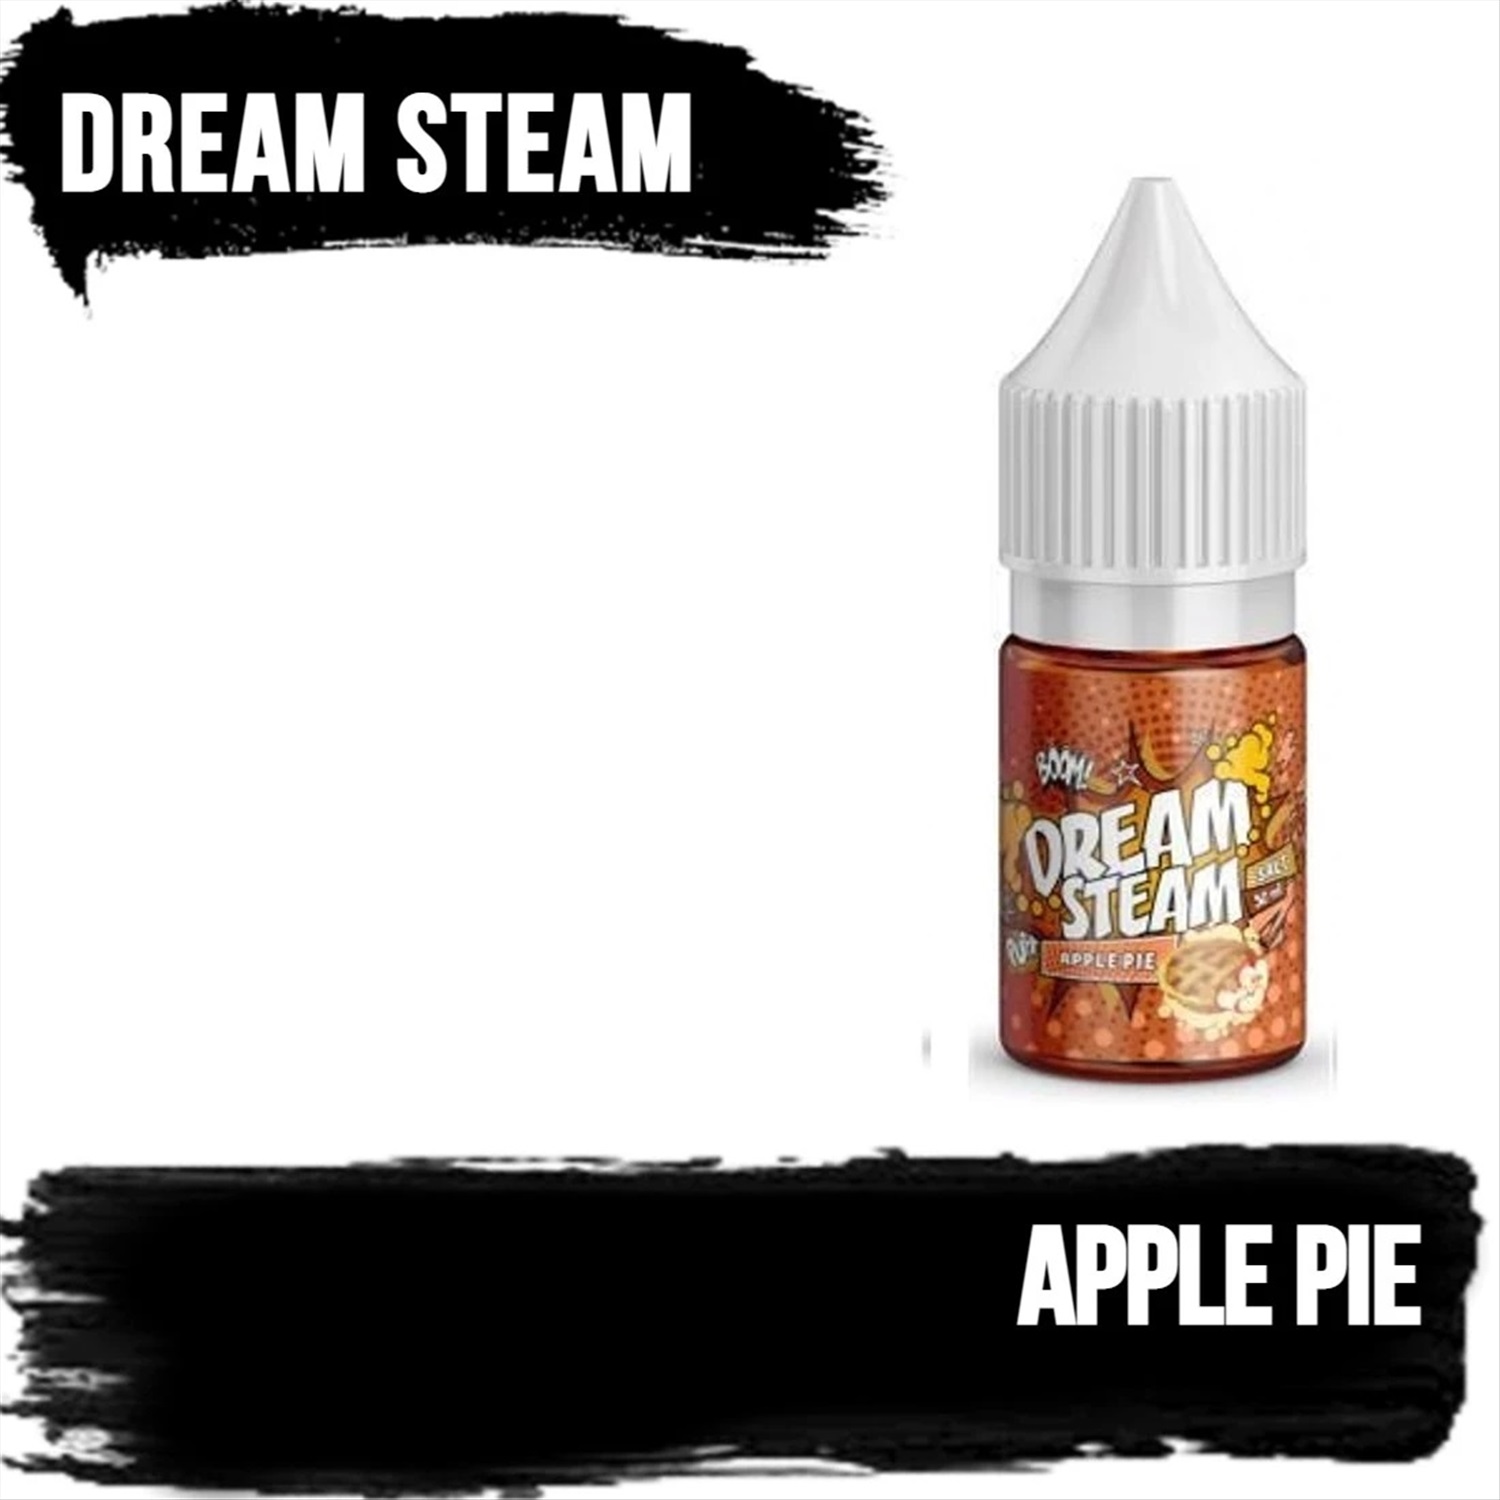 Dream steam жидкость (119) фото